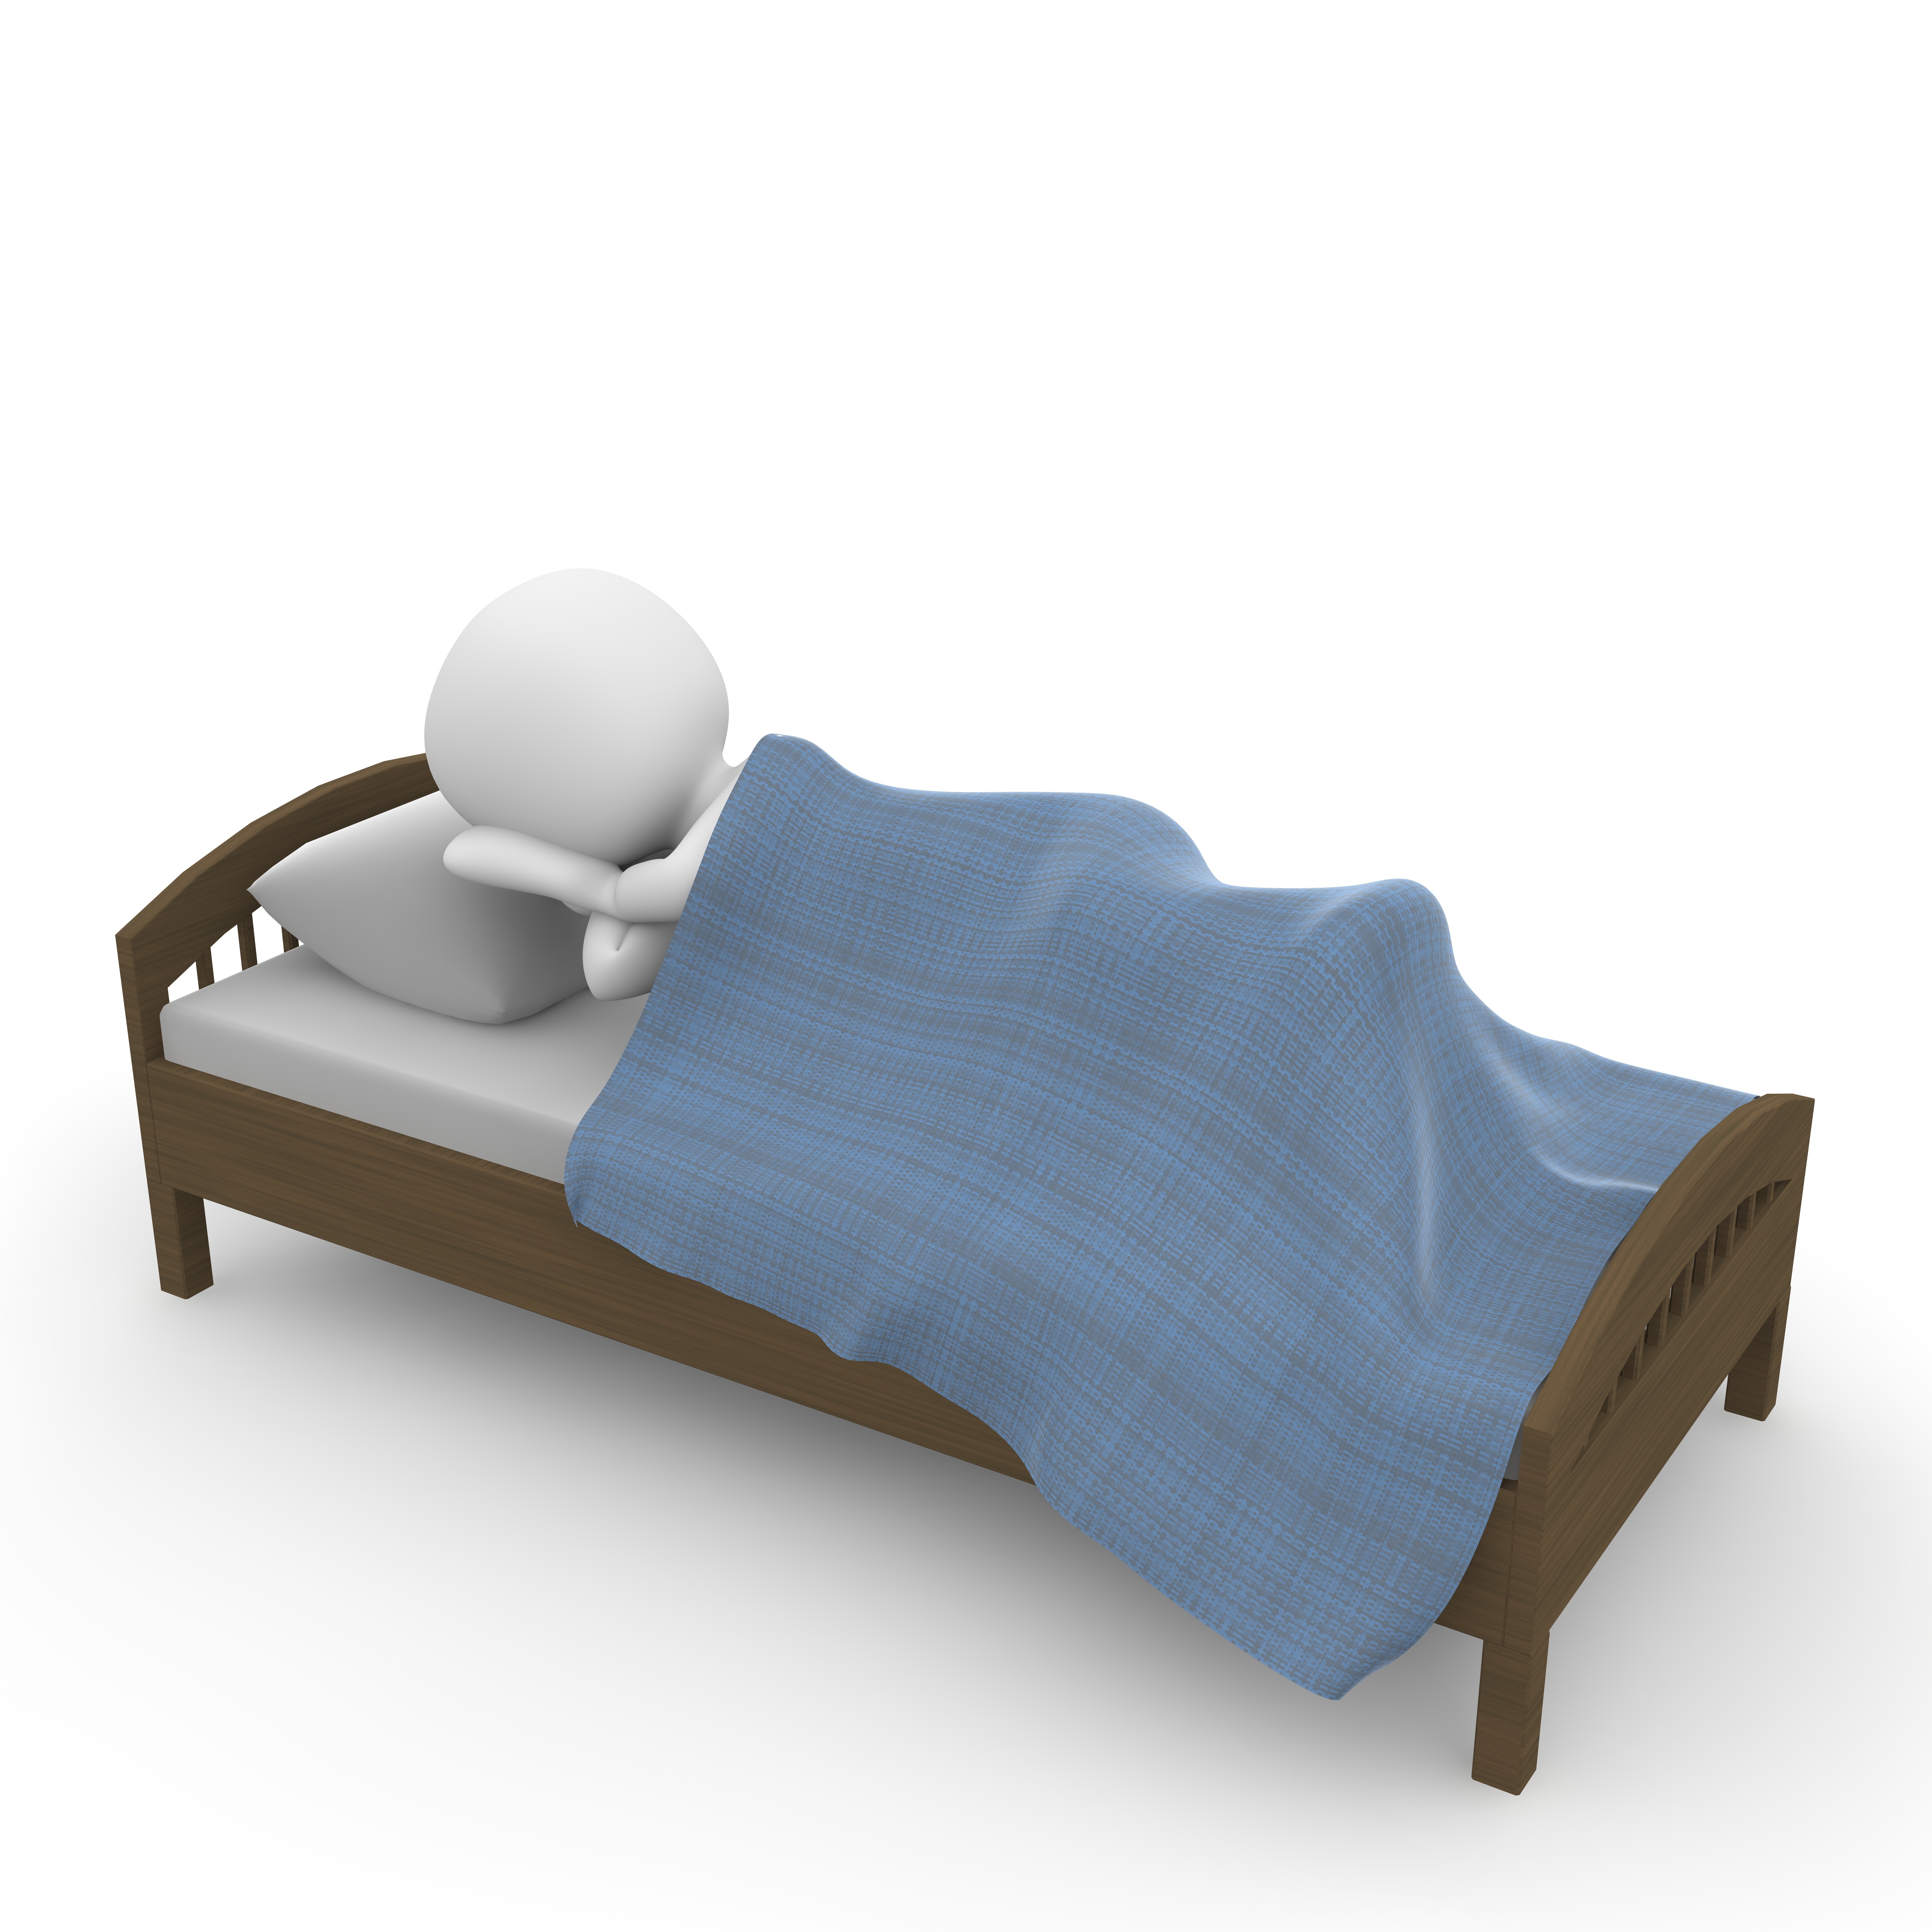 менять кровать во сне